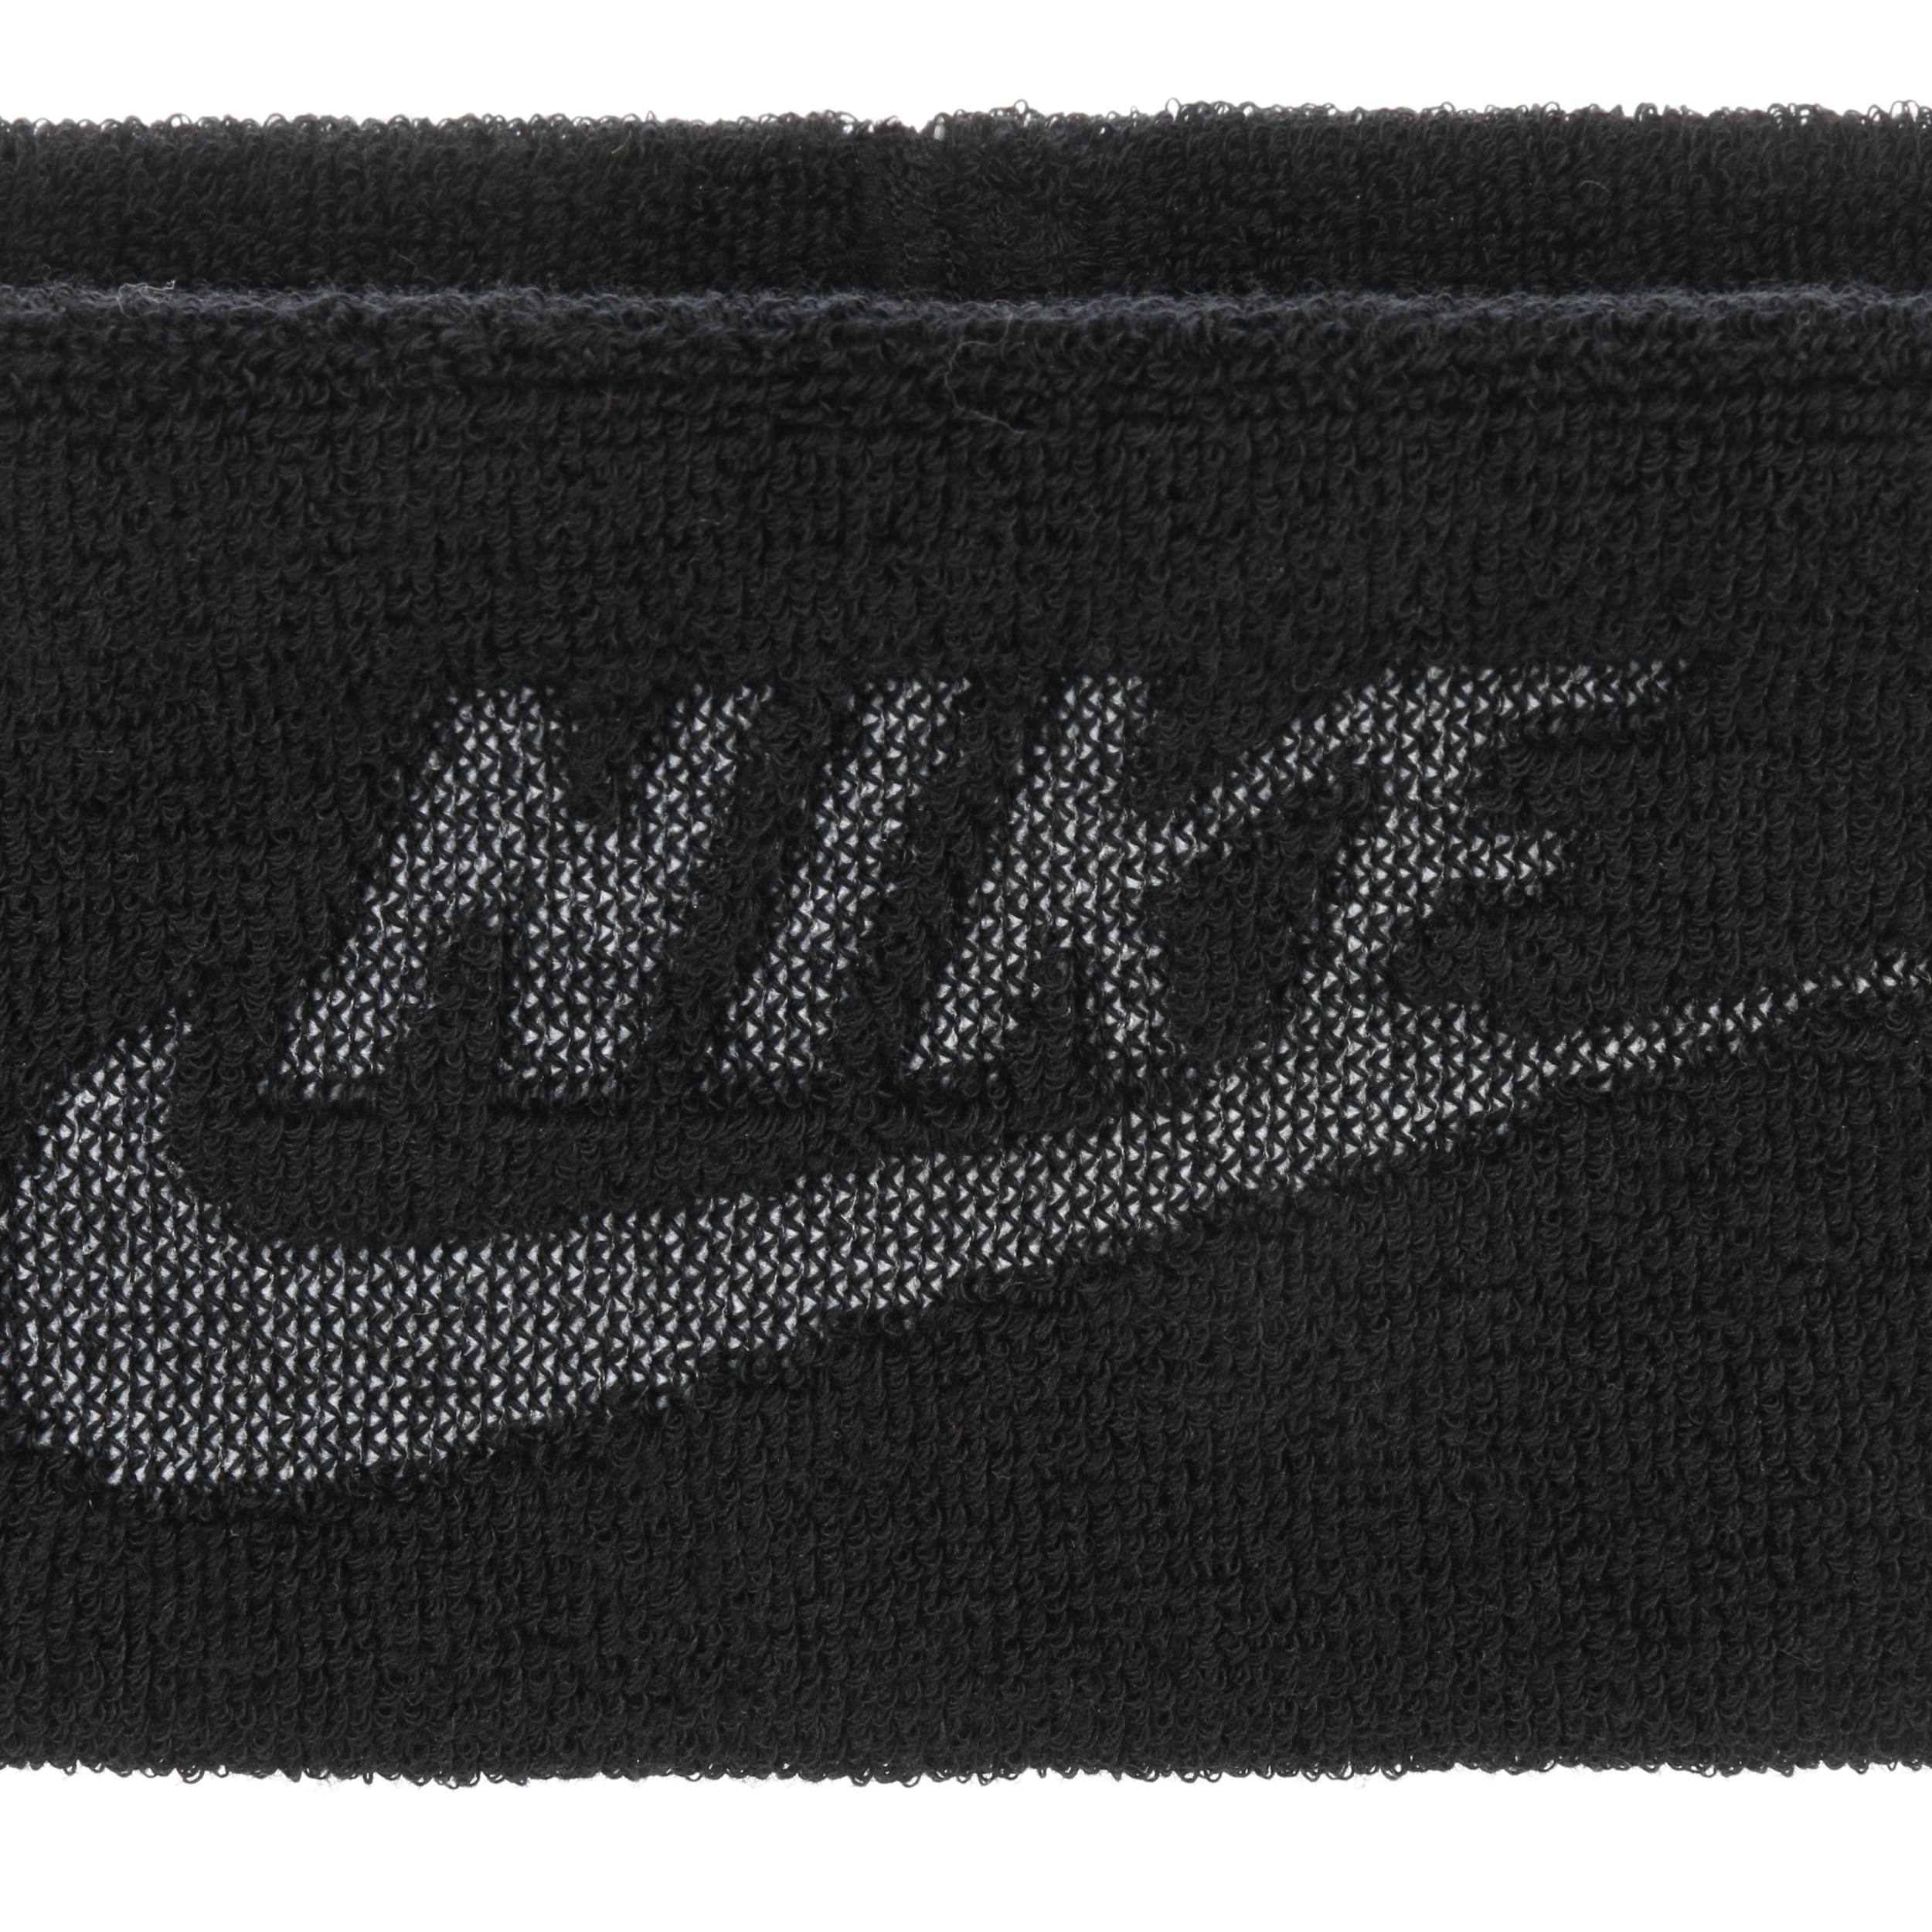 M Sport Terry Headband by Nike - 21,95